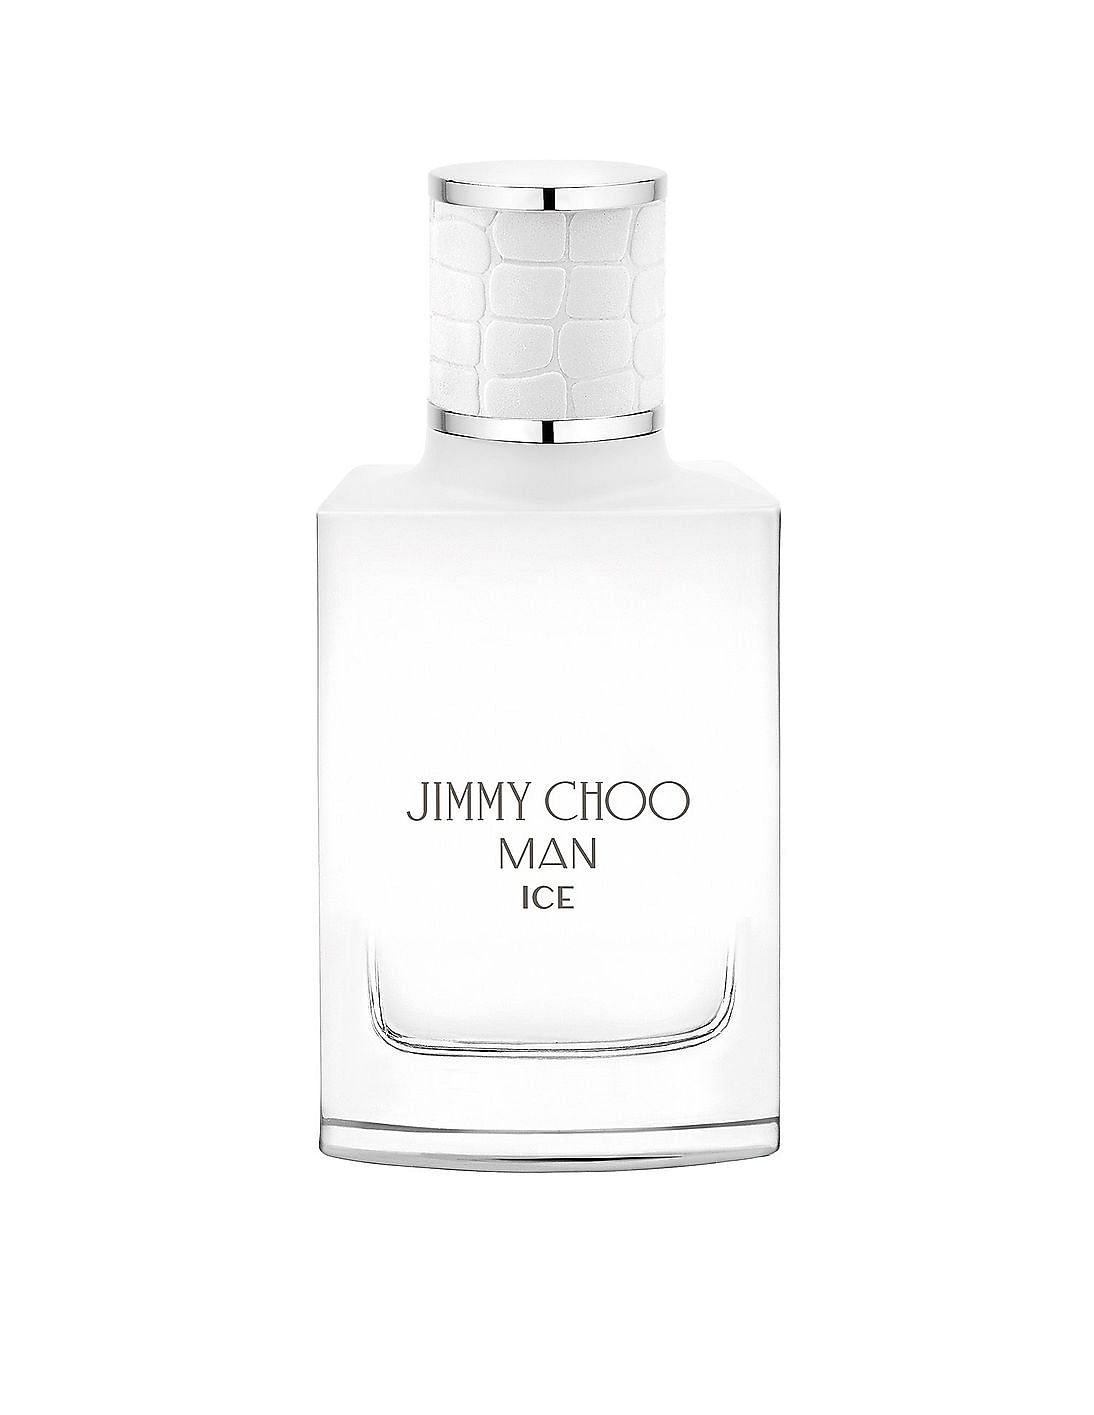 Джимми чу айс. Jimmy Choo Ice man EDT 30 ml. Jimmy Choo man Ice. Jimmy Choo Ice m EDT 30 ml [m]. Jimmy Choo Ice похожие ароматы.